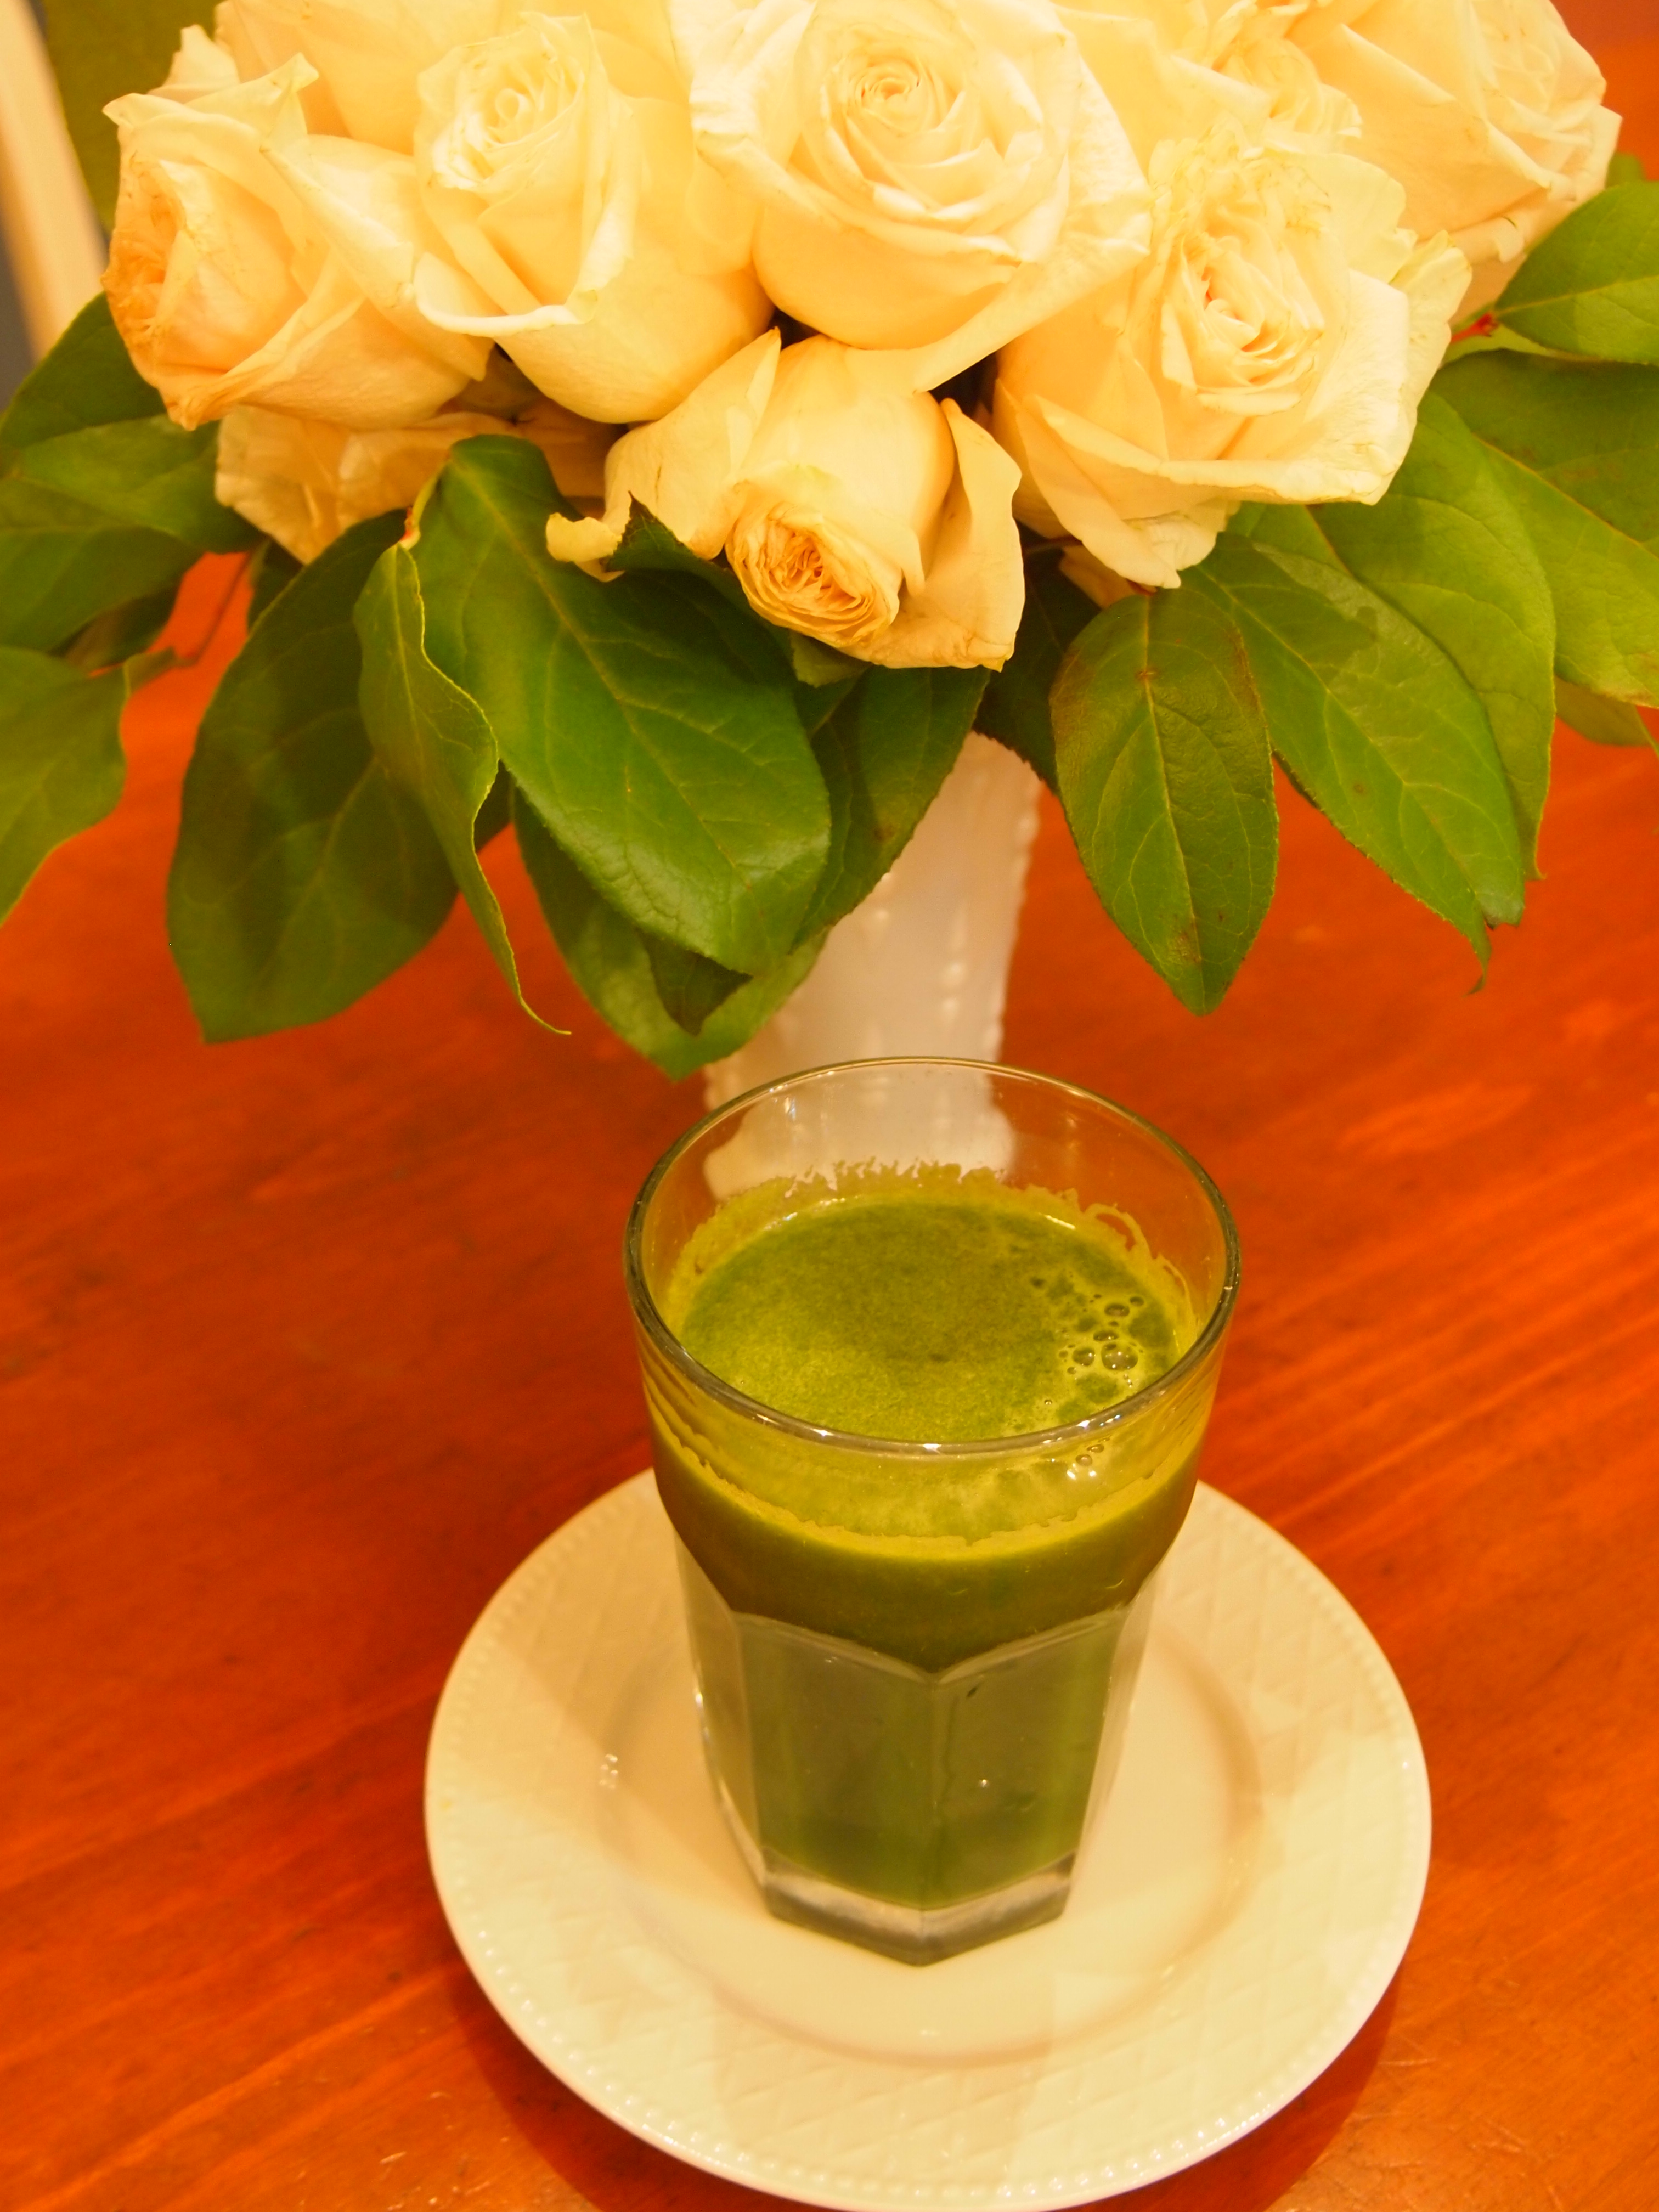 My morning Green Juice